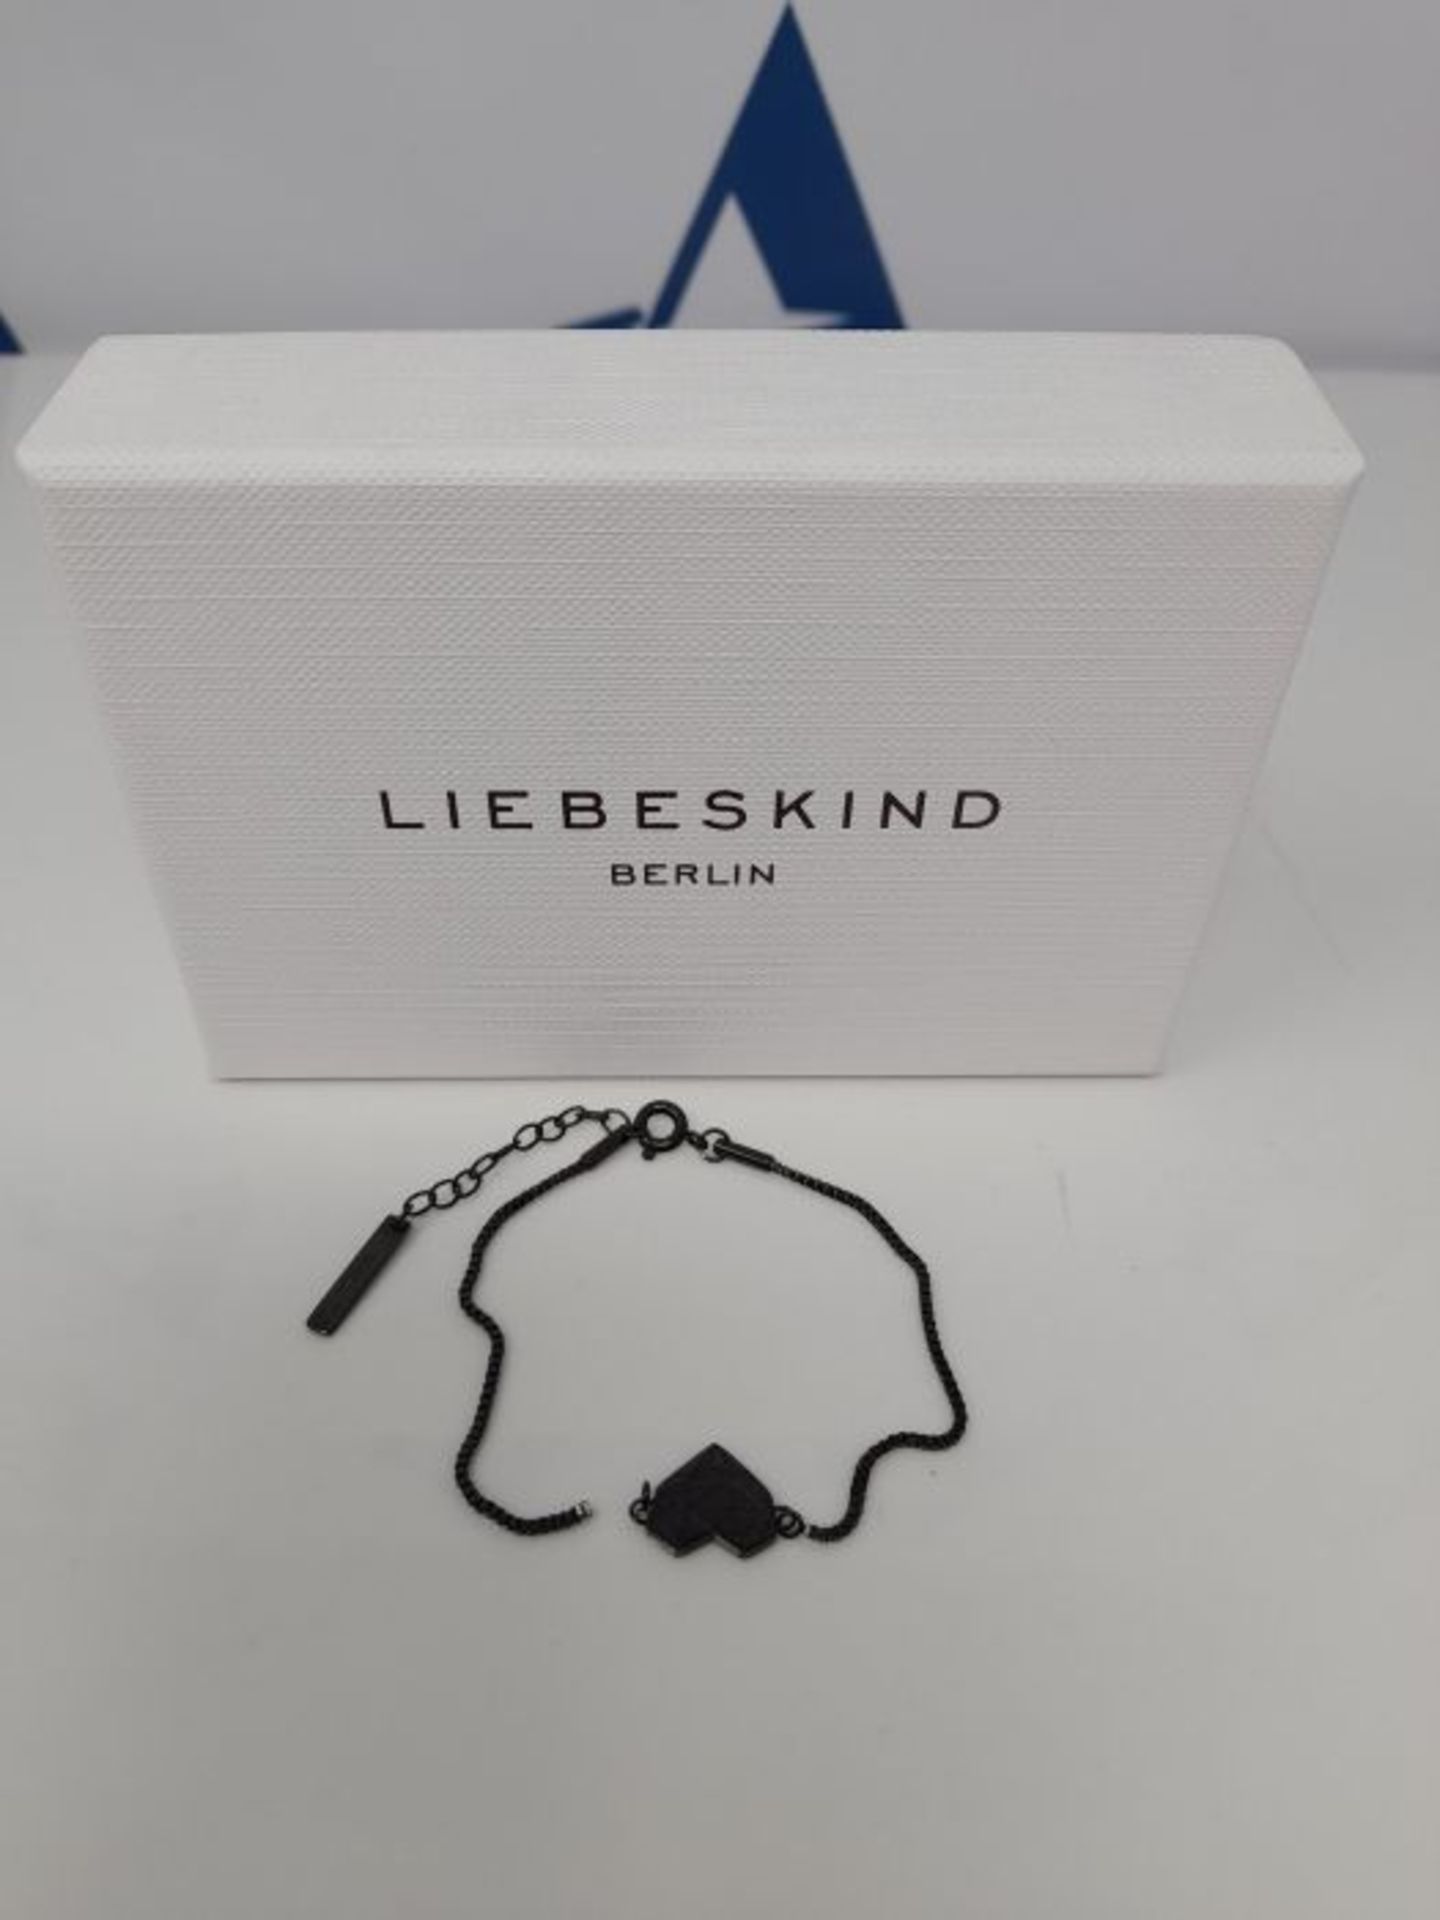 [CRACKED] Liebeskind Berlin Damen Armband Herz Edelstahl Silber 20 cm (schwarz), LJ-03 - Image 5 of 6